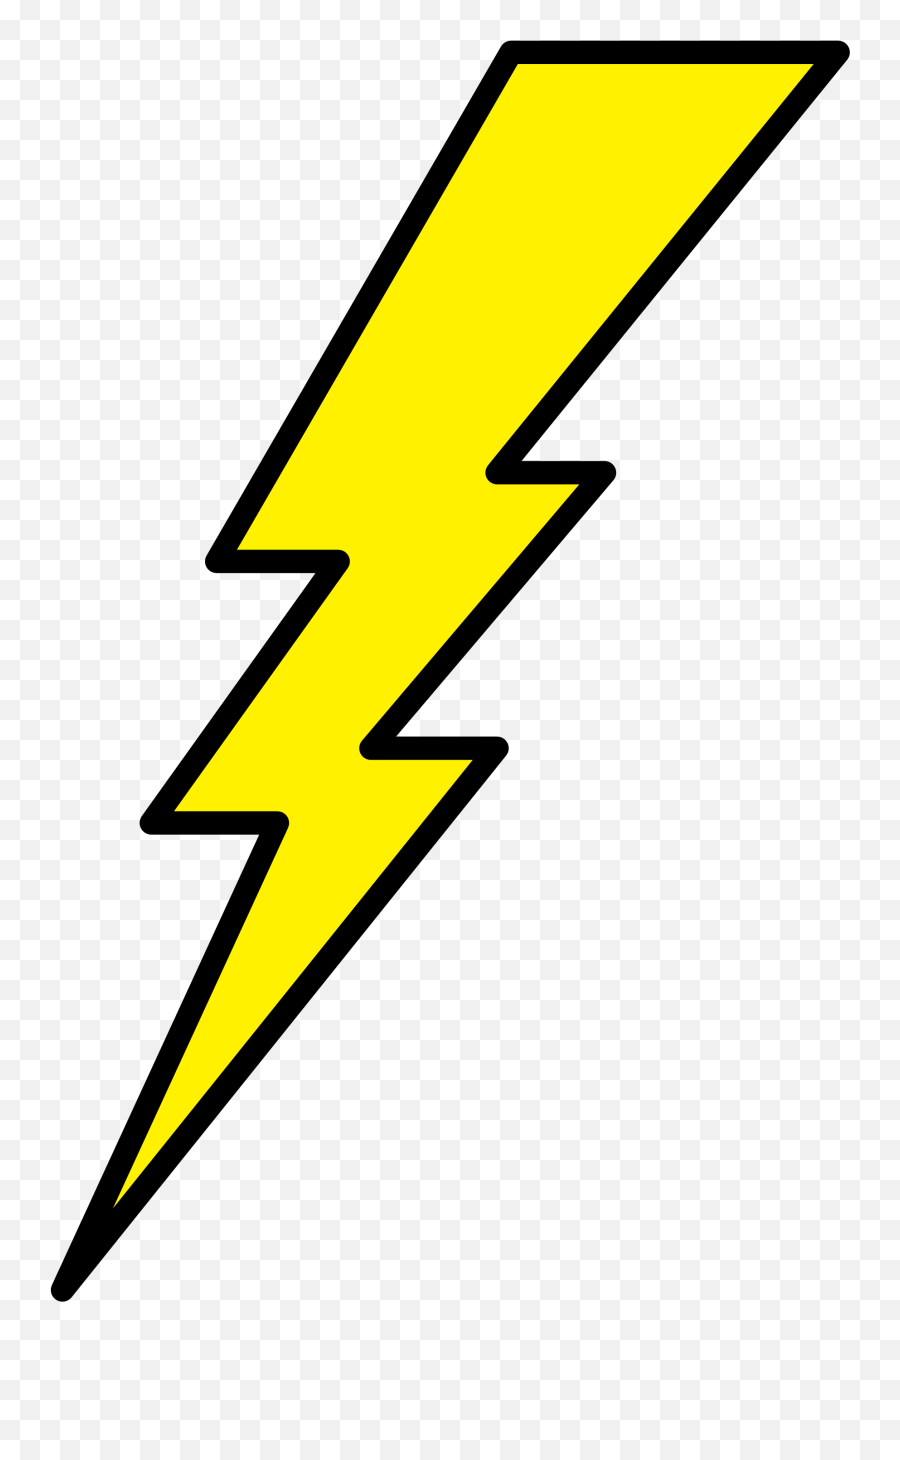 Harry Potter Lightning - Lightning Harry Potter Emoji,Lighting Bolt Emoji